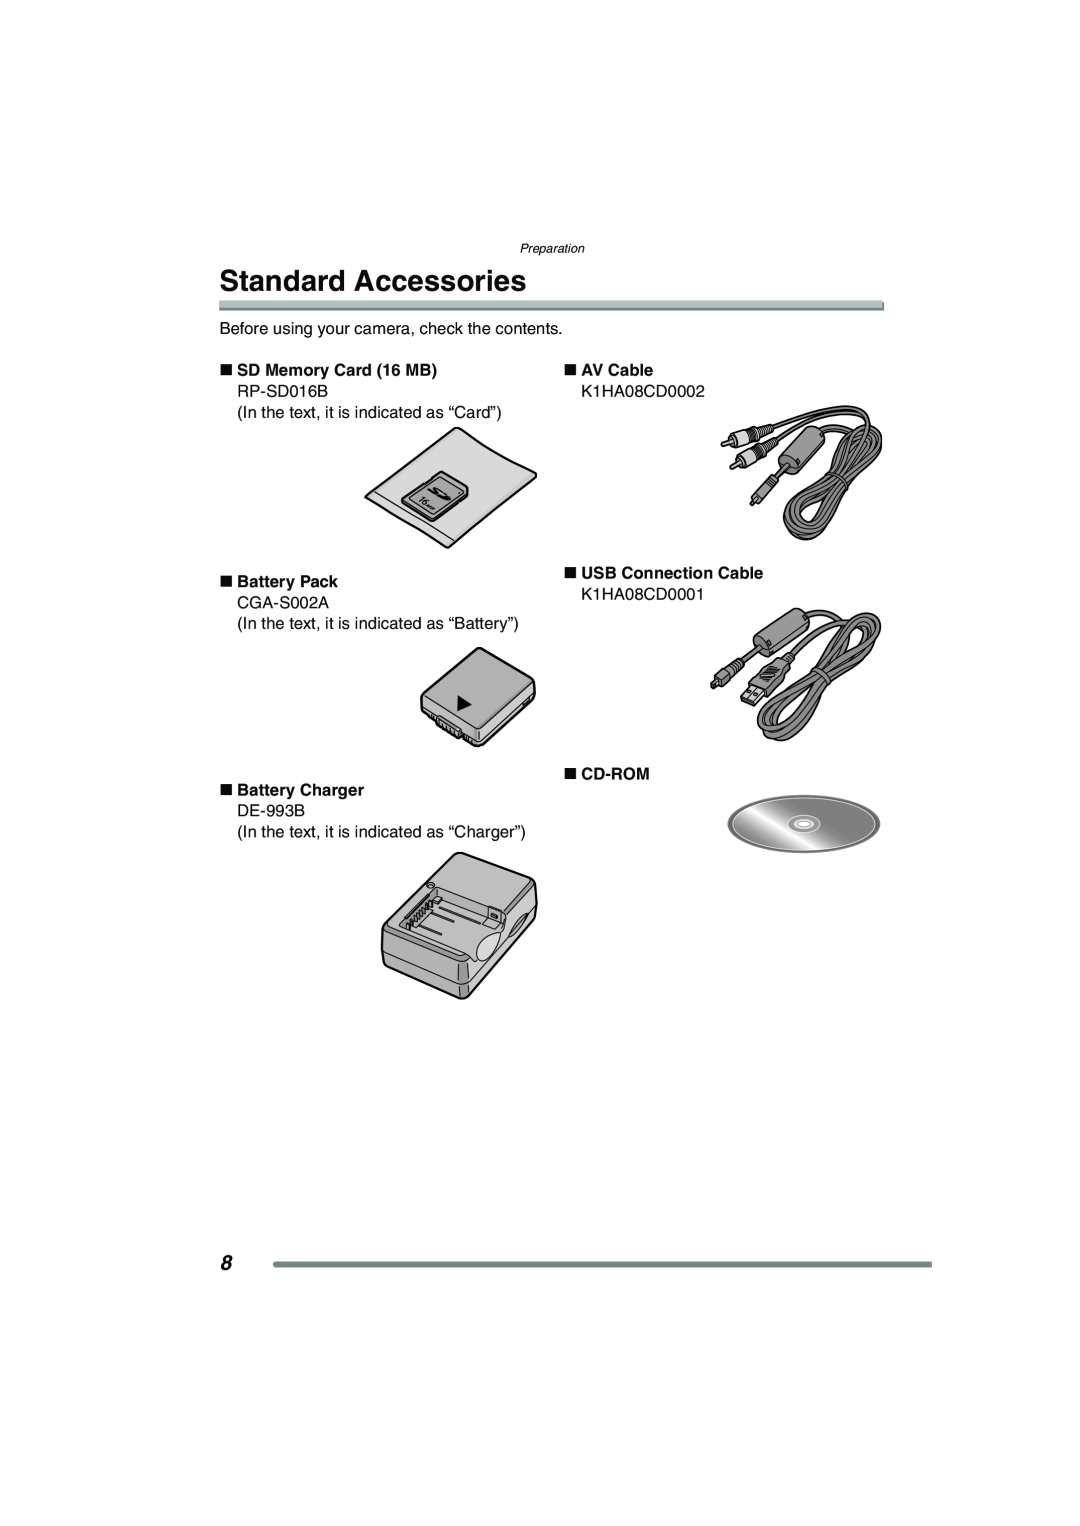 Panasonic DMC-FZ20PP Standard Accessories, ∫ SD Memory Card 16 MB RP-SD016B, ∫ Battery Pack CGA-S002A, Preparation 